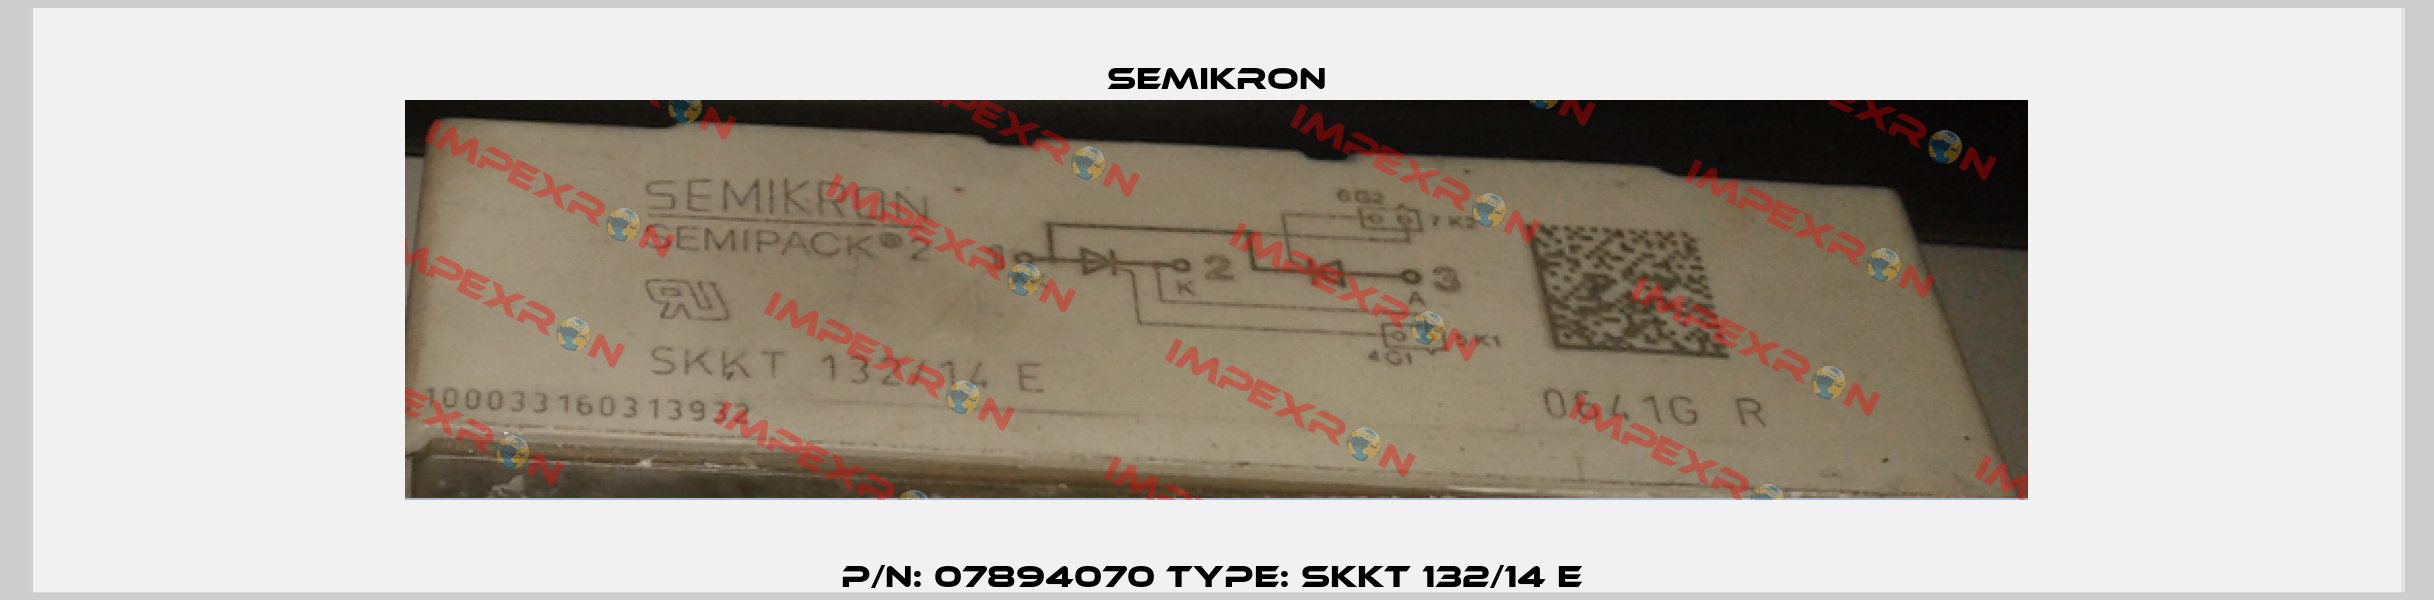 P/N: 07894070 Type: SKKT 132/14 E  Semikron